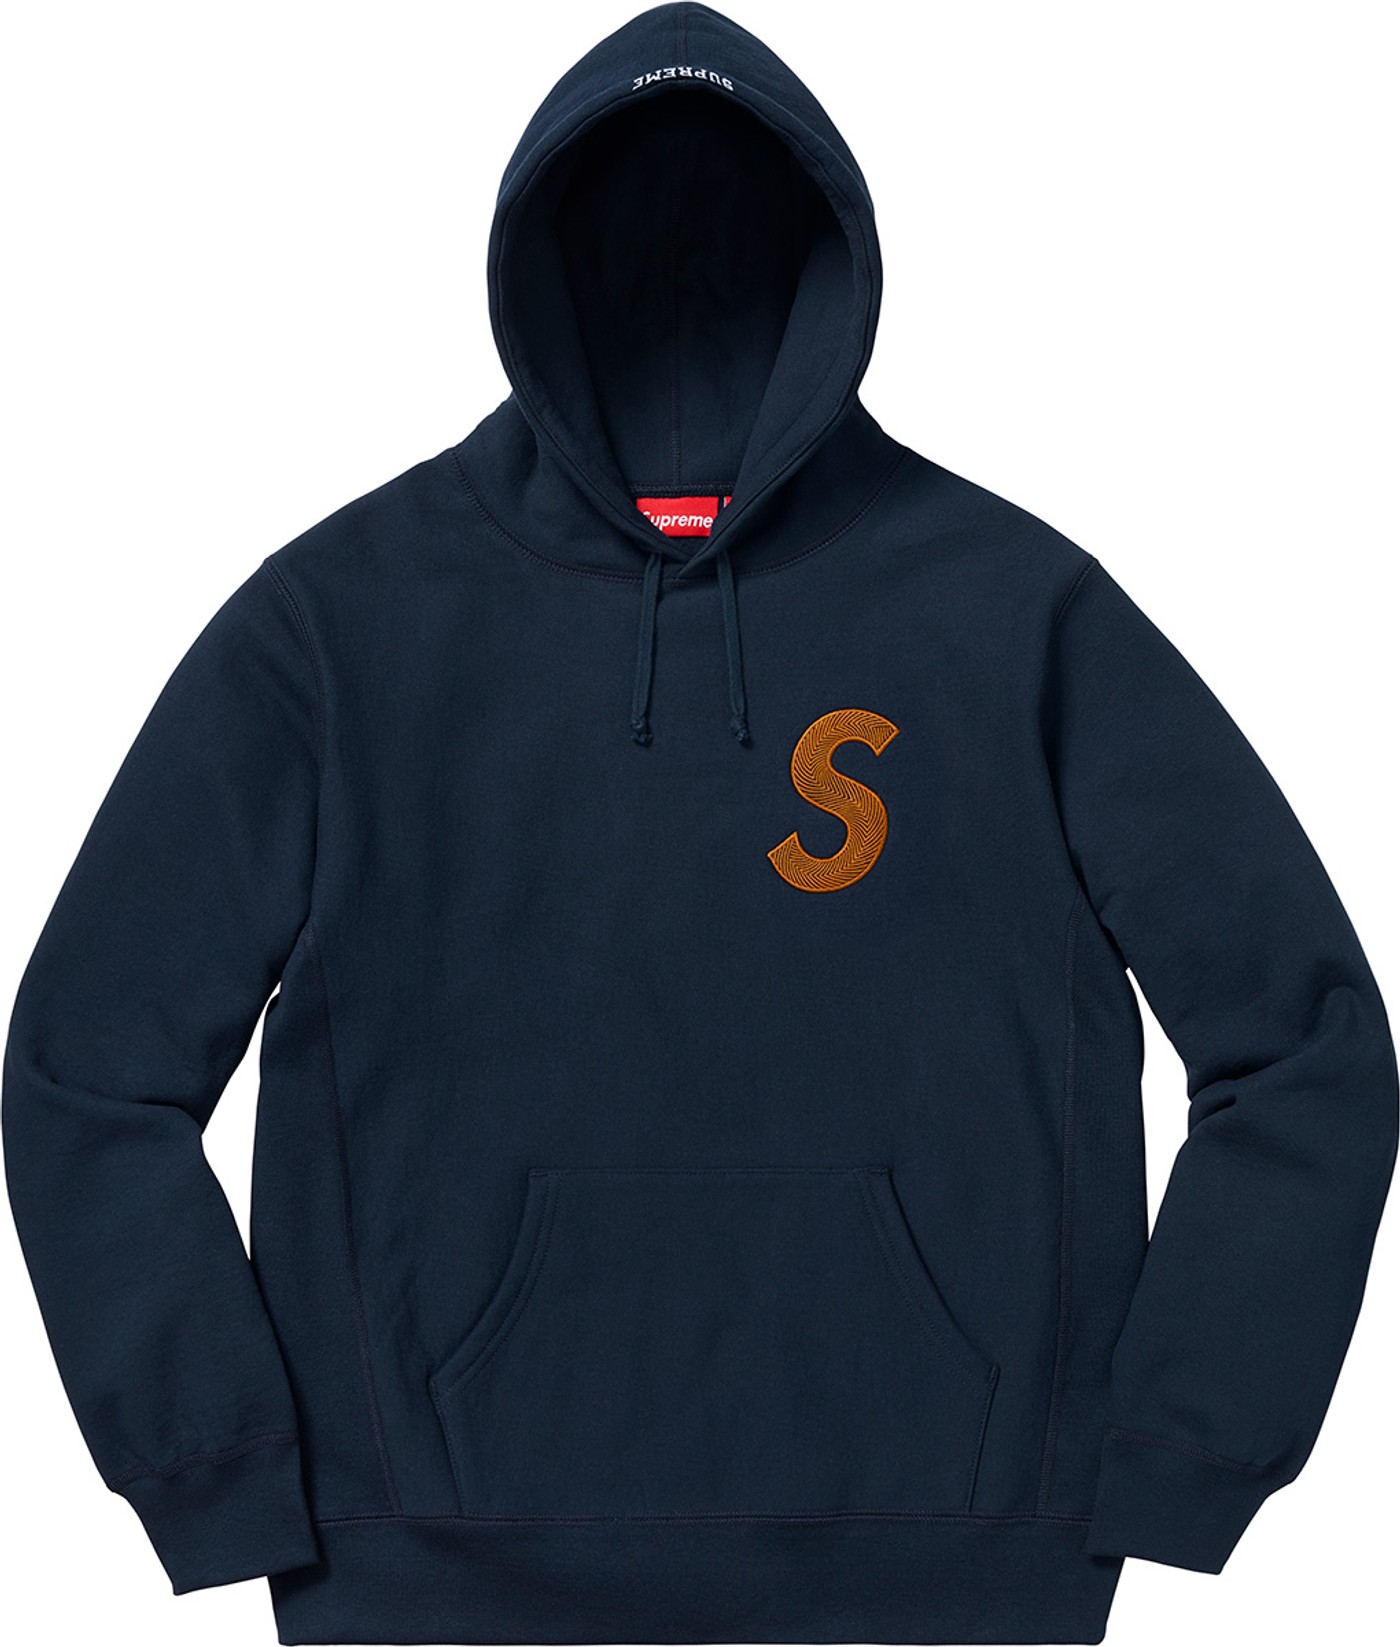 Box Logo Crewneck Sweatshirt - Fall/Winter 2018 Preview – Supreme